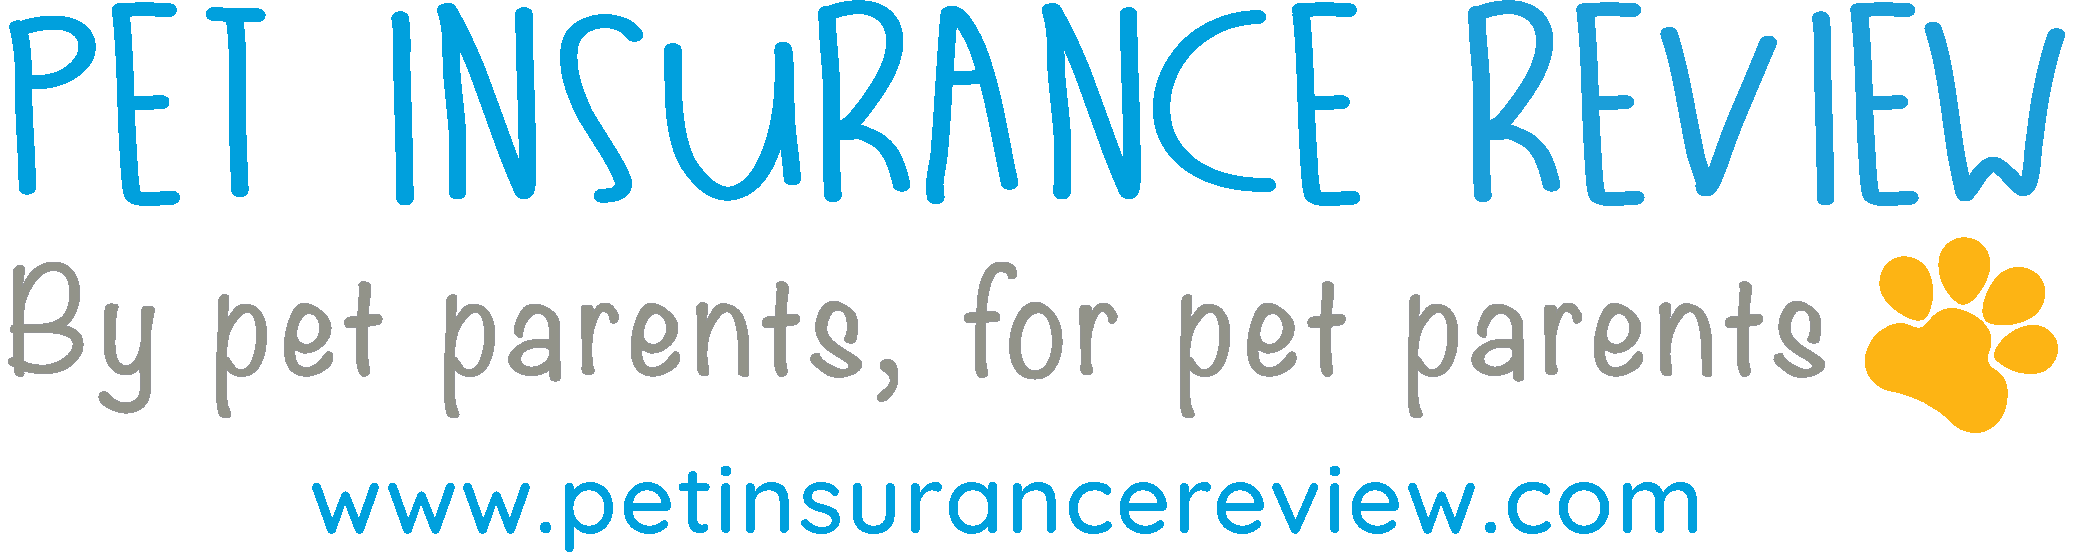 Pet Insurance Review logo